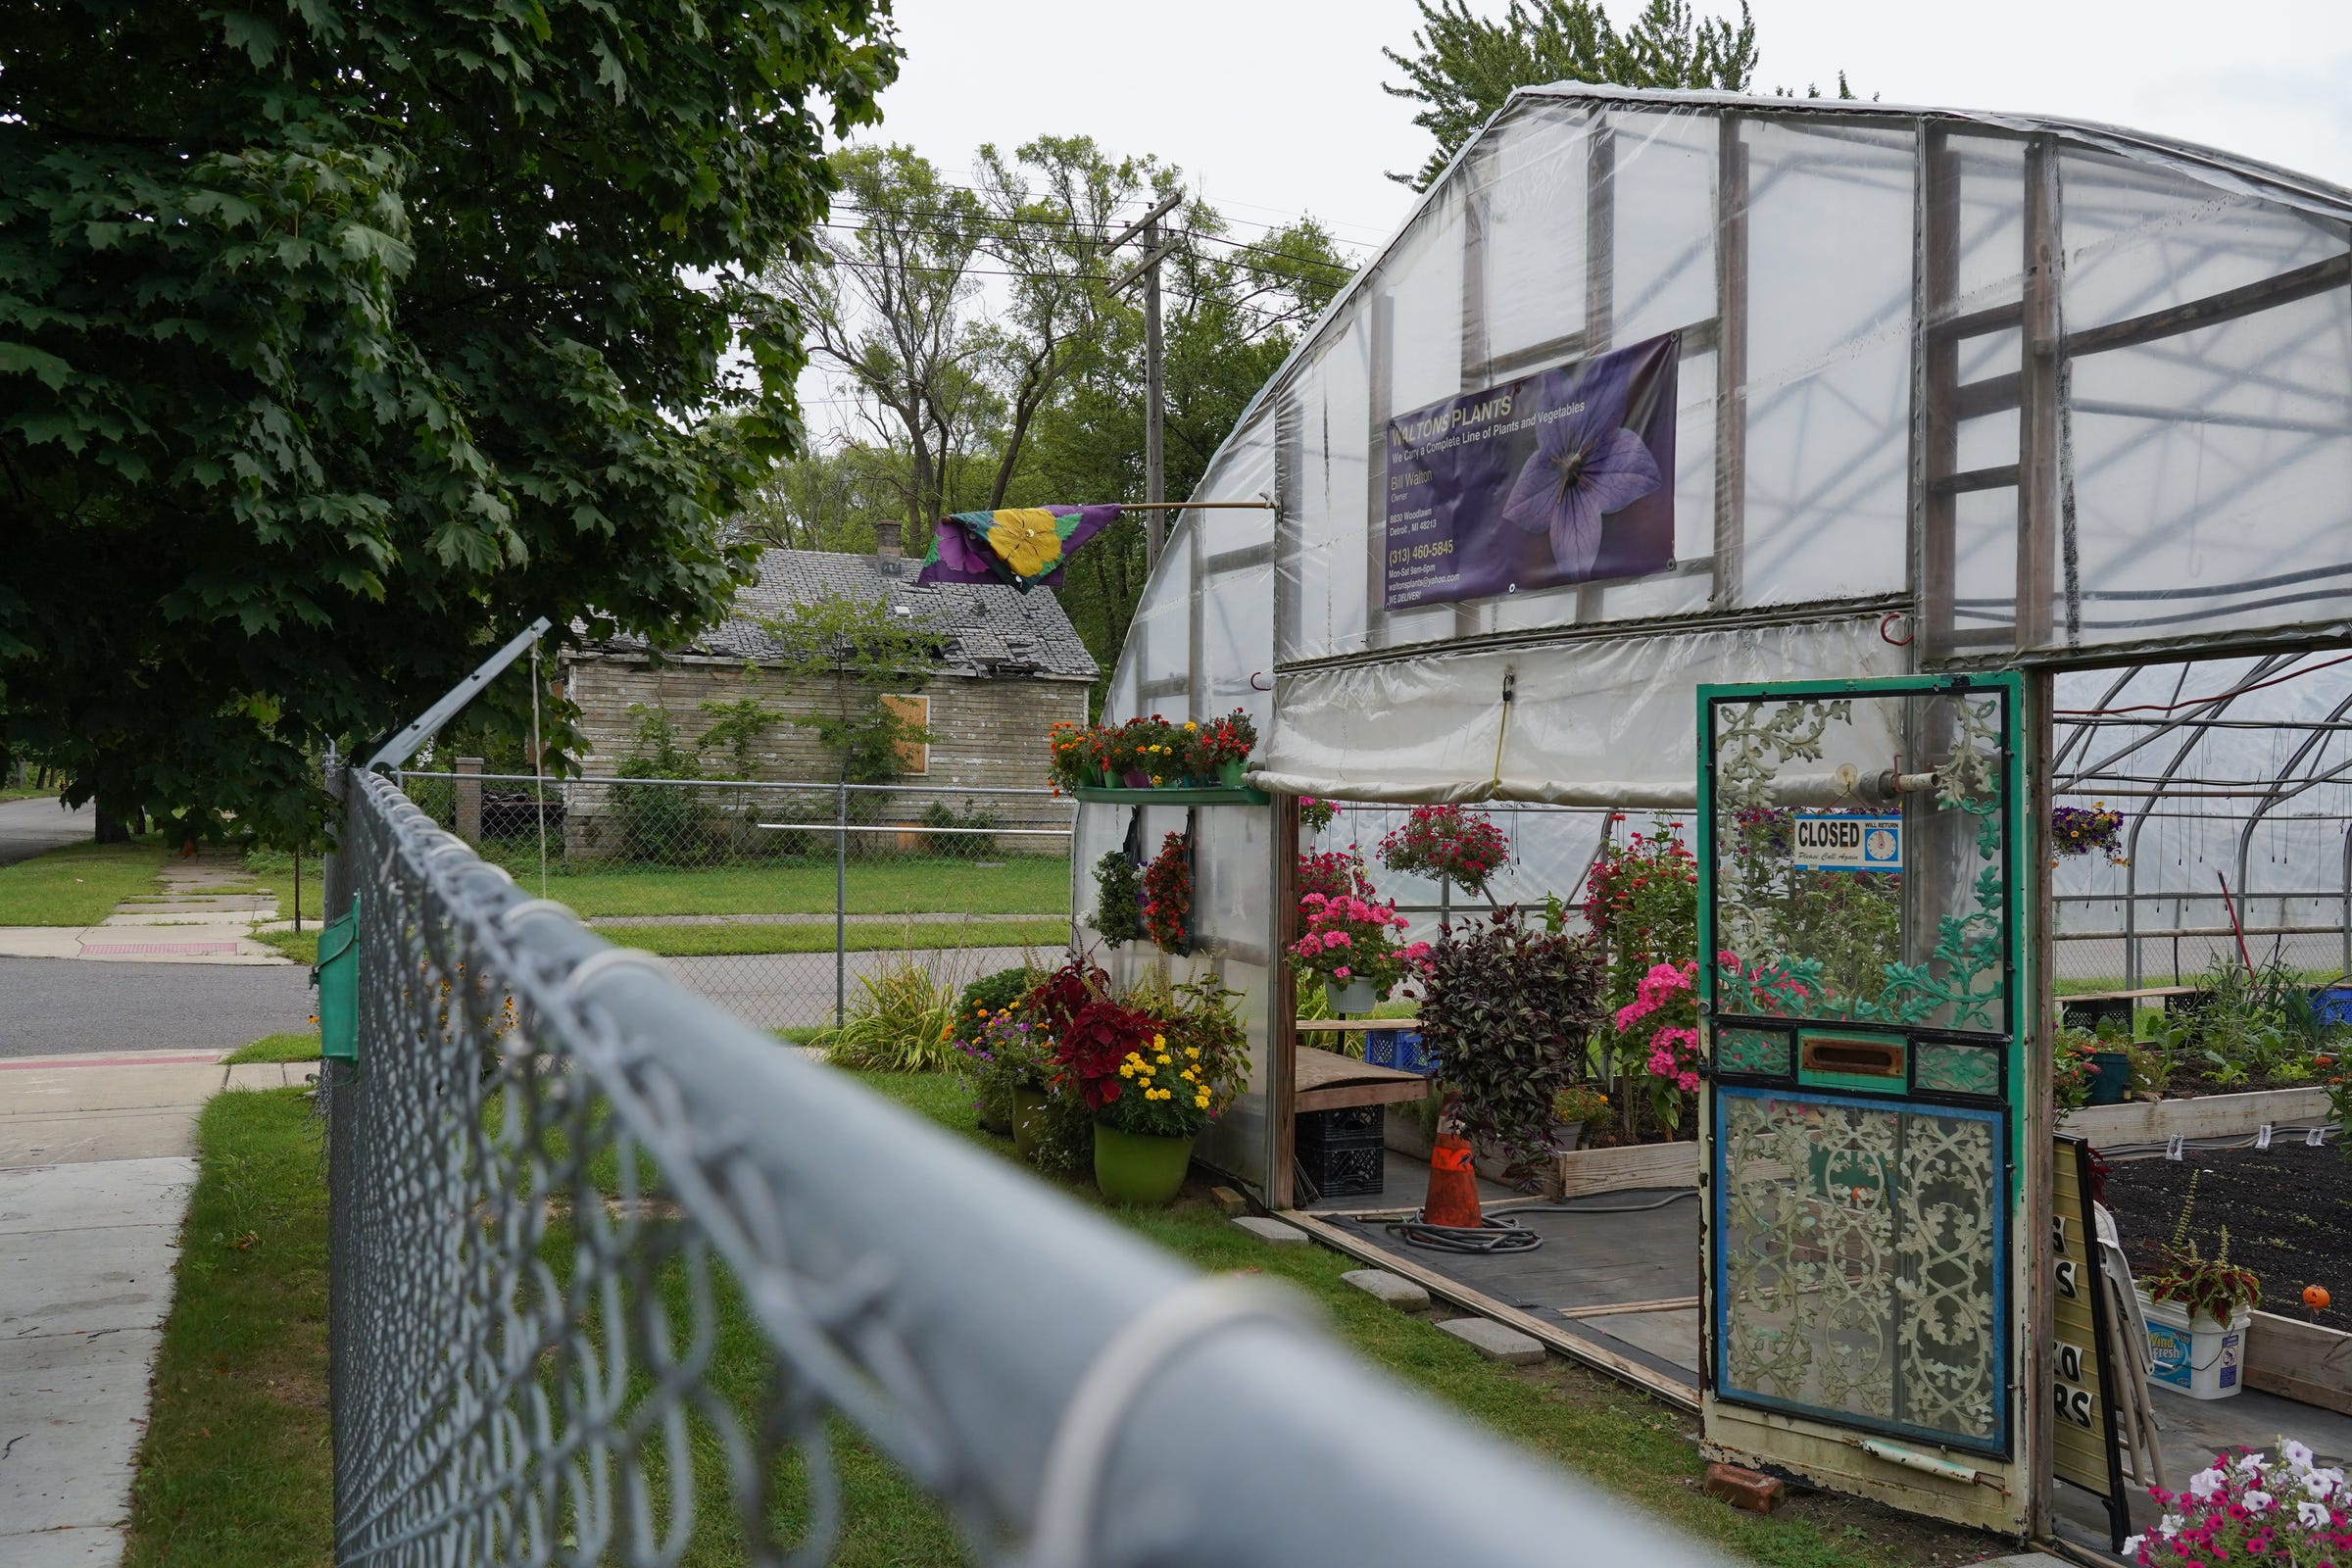 Walton's Plants as seen in a neighborhood on Detroit's east side on Tuesday, Sept. 3, 2019.